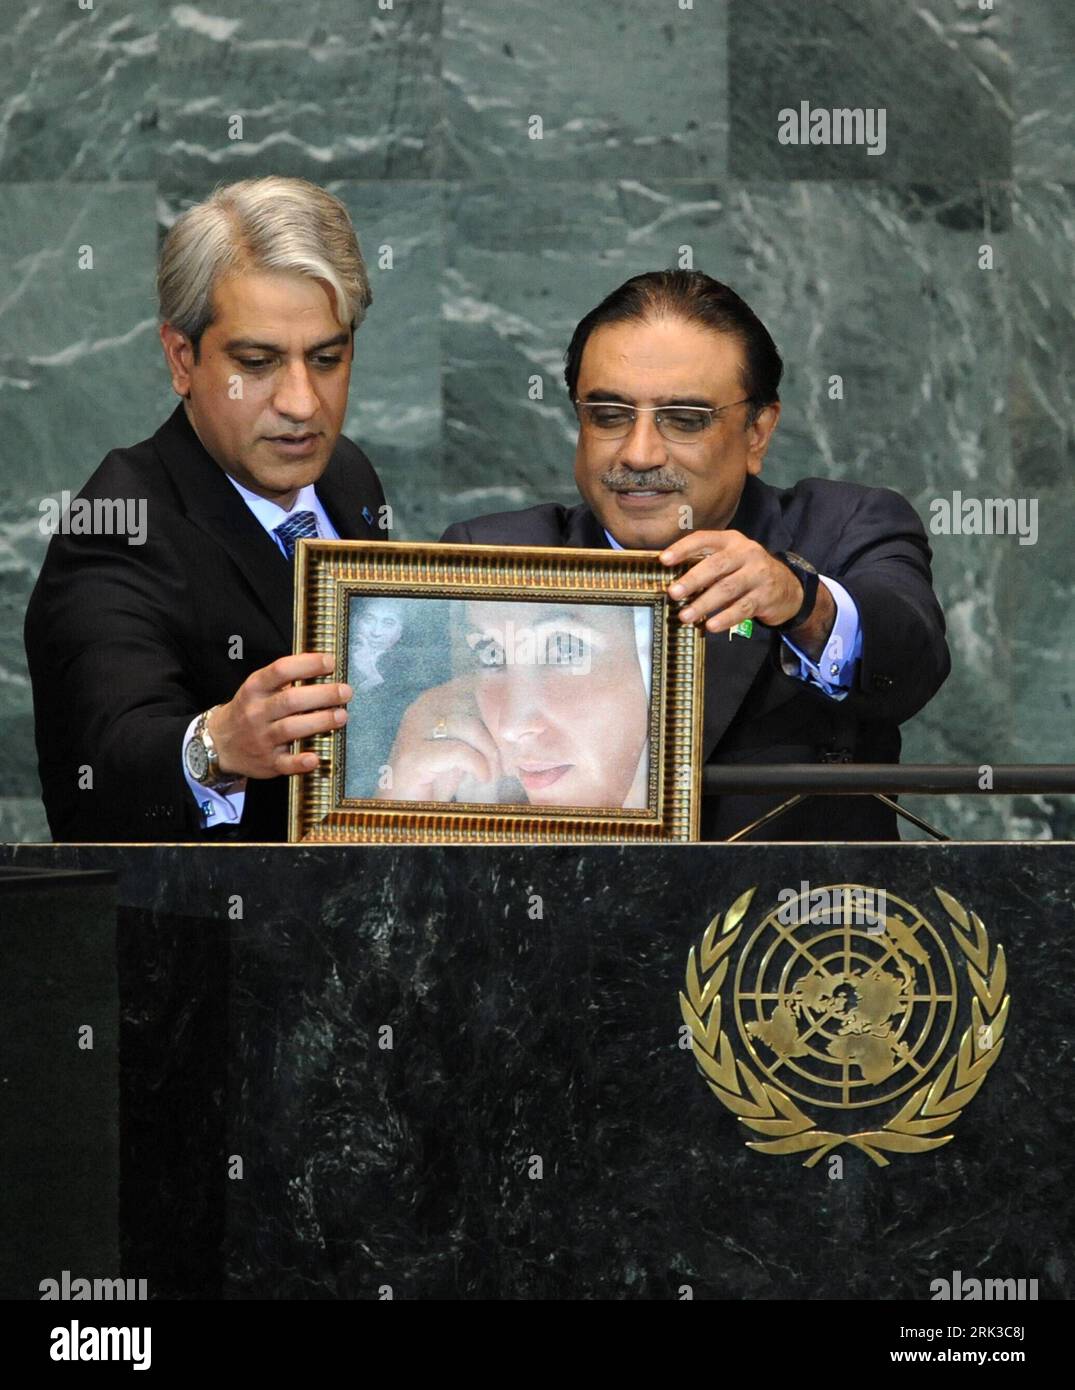 Bildnummer: 53431854  Datum: 25.09.2009  Copyright: imago/Xinhua (090925) -- NEW YORK, Sept. 25, 2009 (Xinhua) -- Pakistani President Asif Ali Zardari (R) is helped to set up a of his late wife, slained politician Benazir Bhutto and her slained father Zulfikar Ali Bhutto, during his address to the UN General Assembly at the United Nations headquarters in New York Sept. 25, 2009. (Xinhua/Shen Hong) (3)US-NEW YORK-UN GA DEBATE-ZARDARI PUBLICATIONxNOTxINxCHN People Politik UN Vollversammlung Generalversammlung UNO Vereinte Nationen kbdig xng 2009 hoch premiumd o0 Frau, Ehefrau, Familie, Foto    B Stock Photo